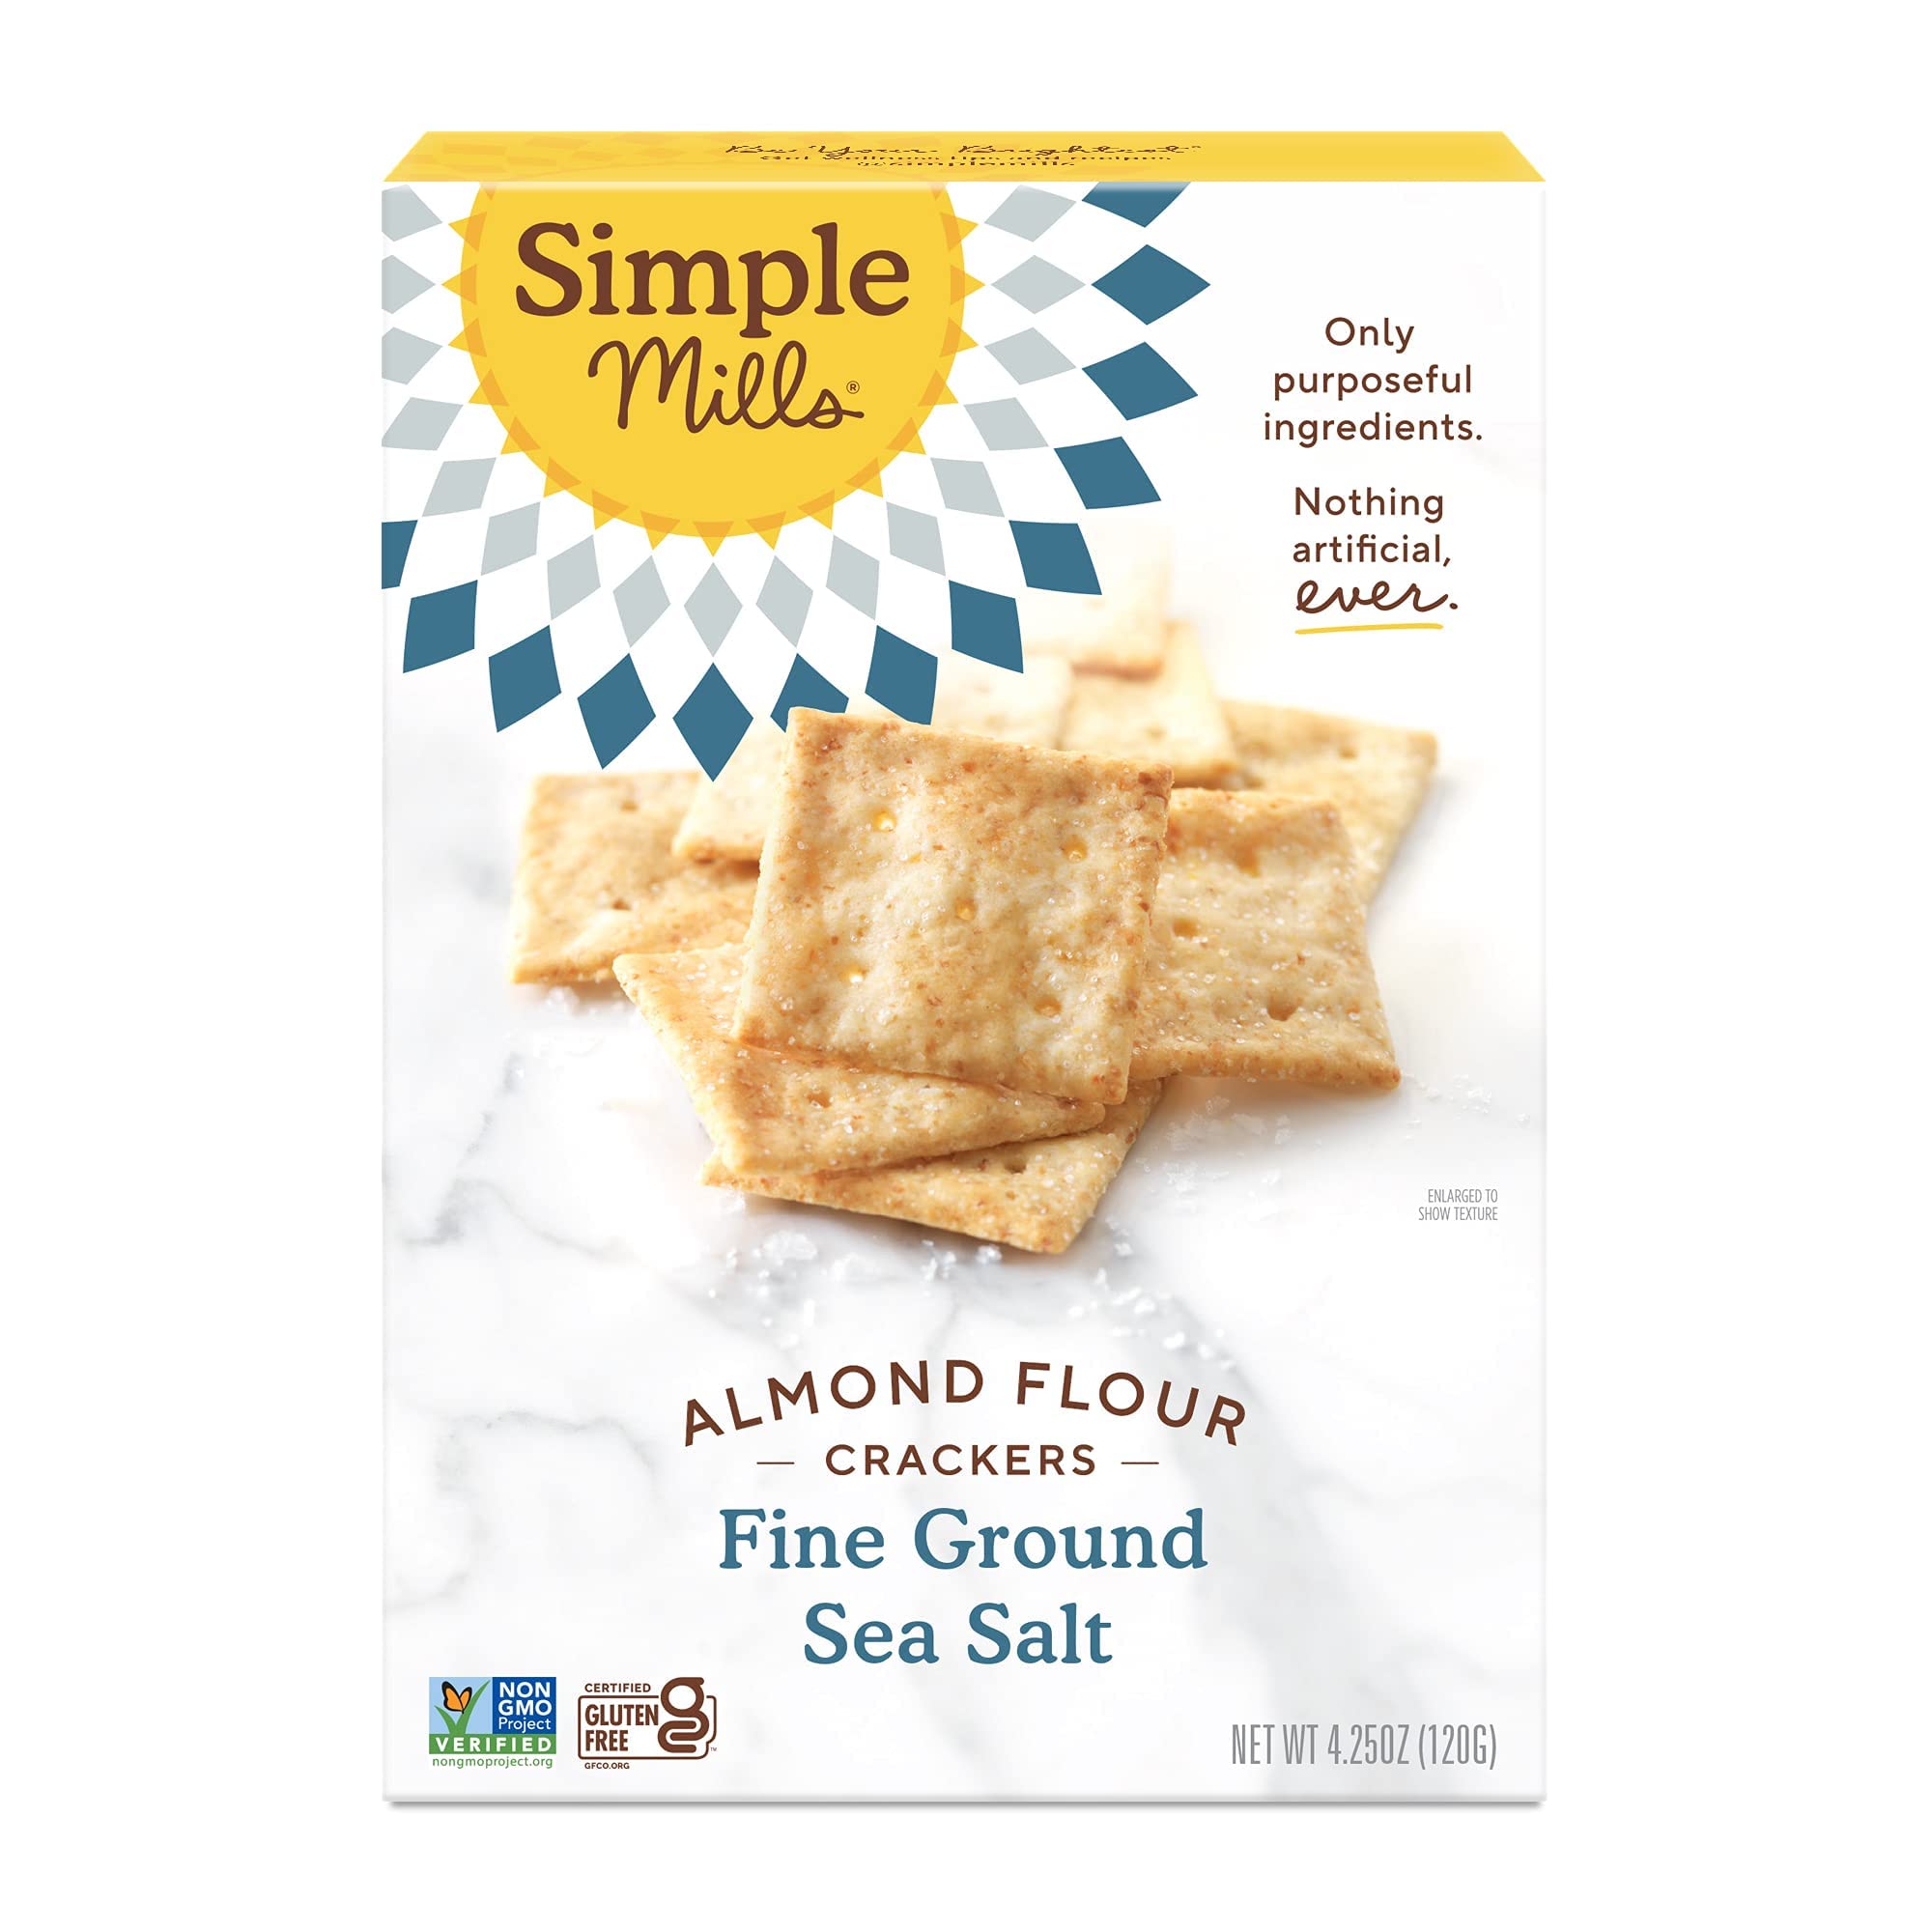 Simple Mills Almond Flour Crackers, Fine Ground Sea Salt - Gluten Free, Vegan, Healthy Snacks, 4.25 Ounce (Pack of 1) $1.99 w/ S&S Amazon